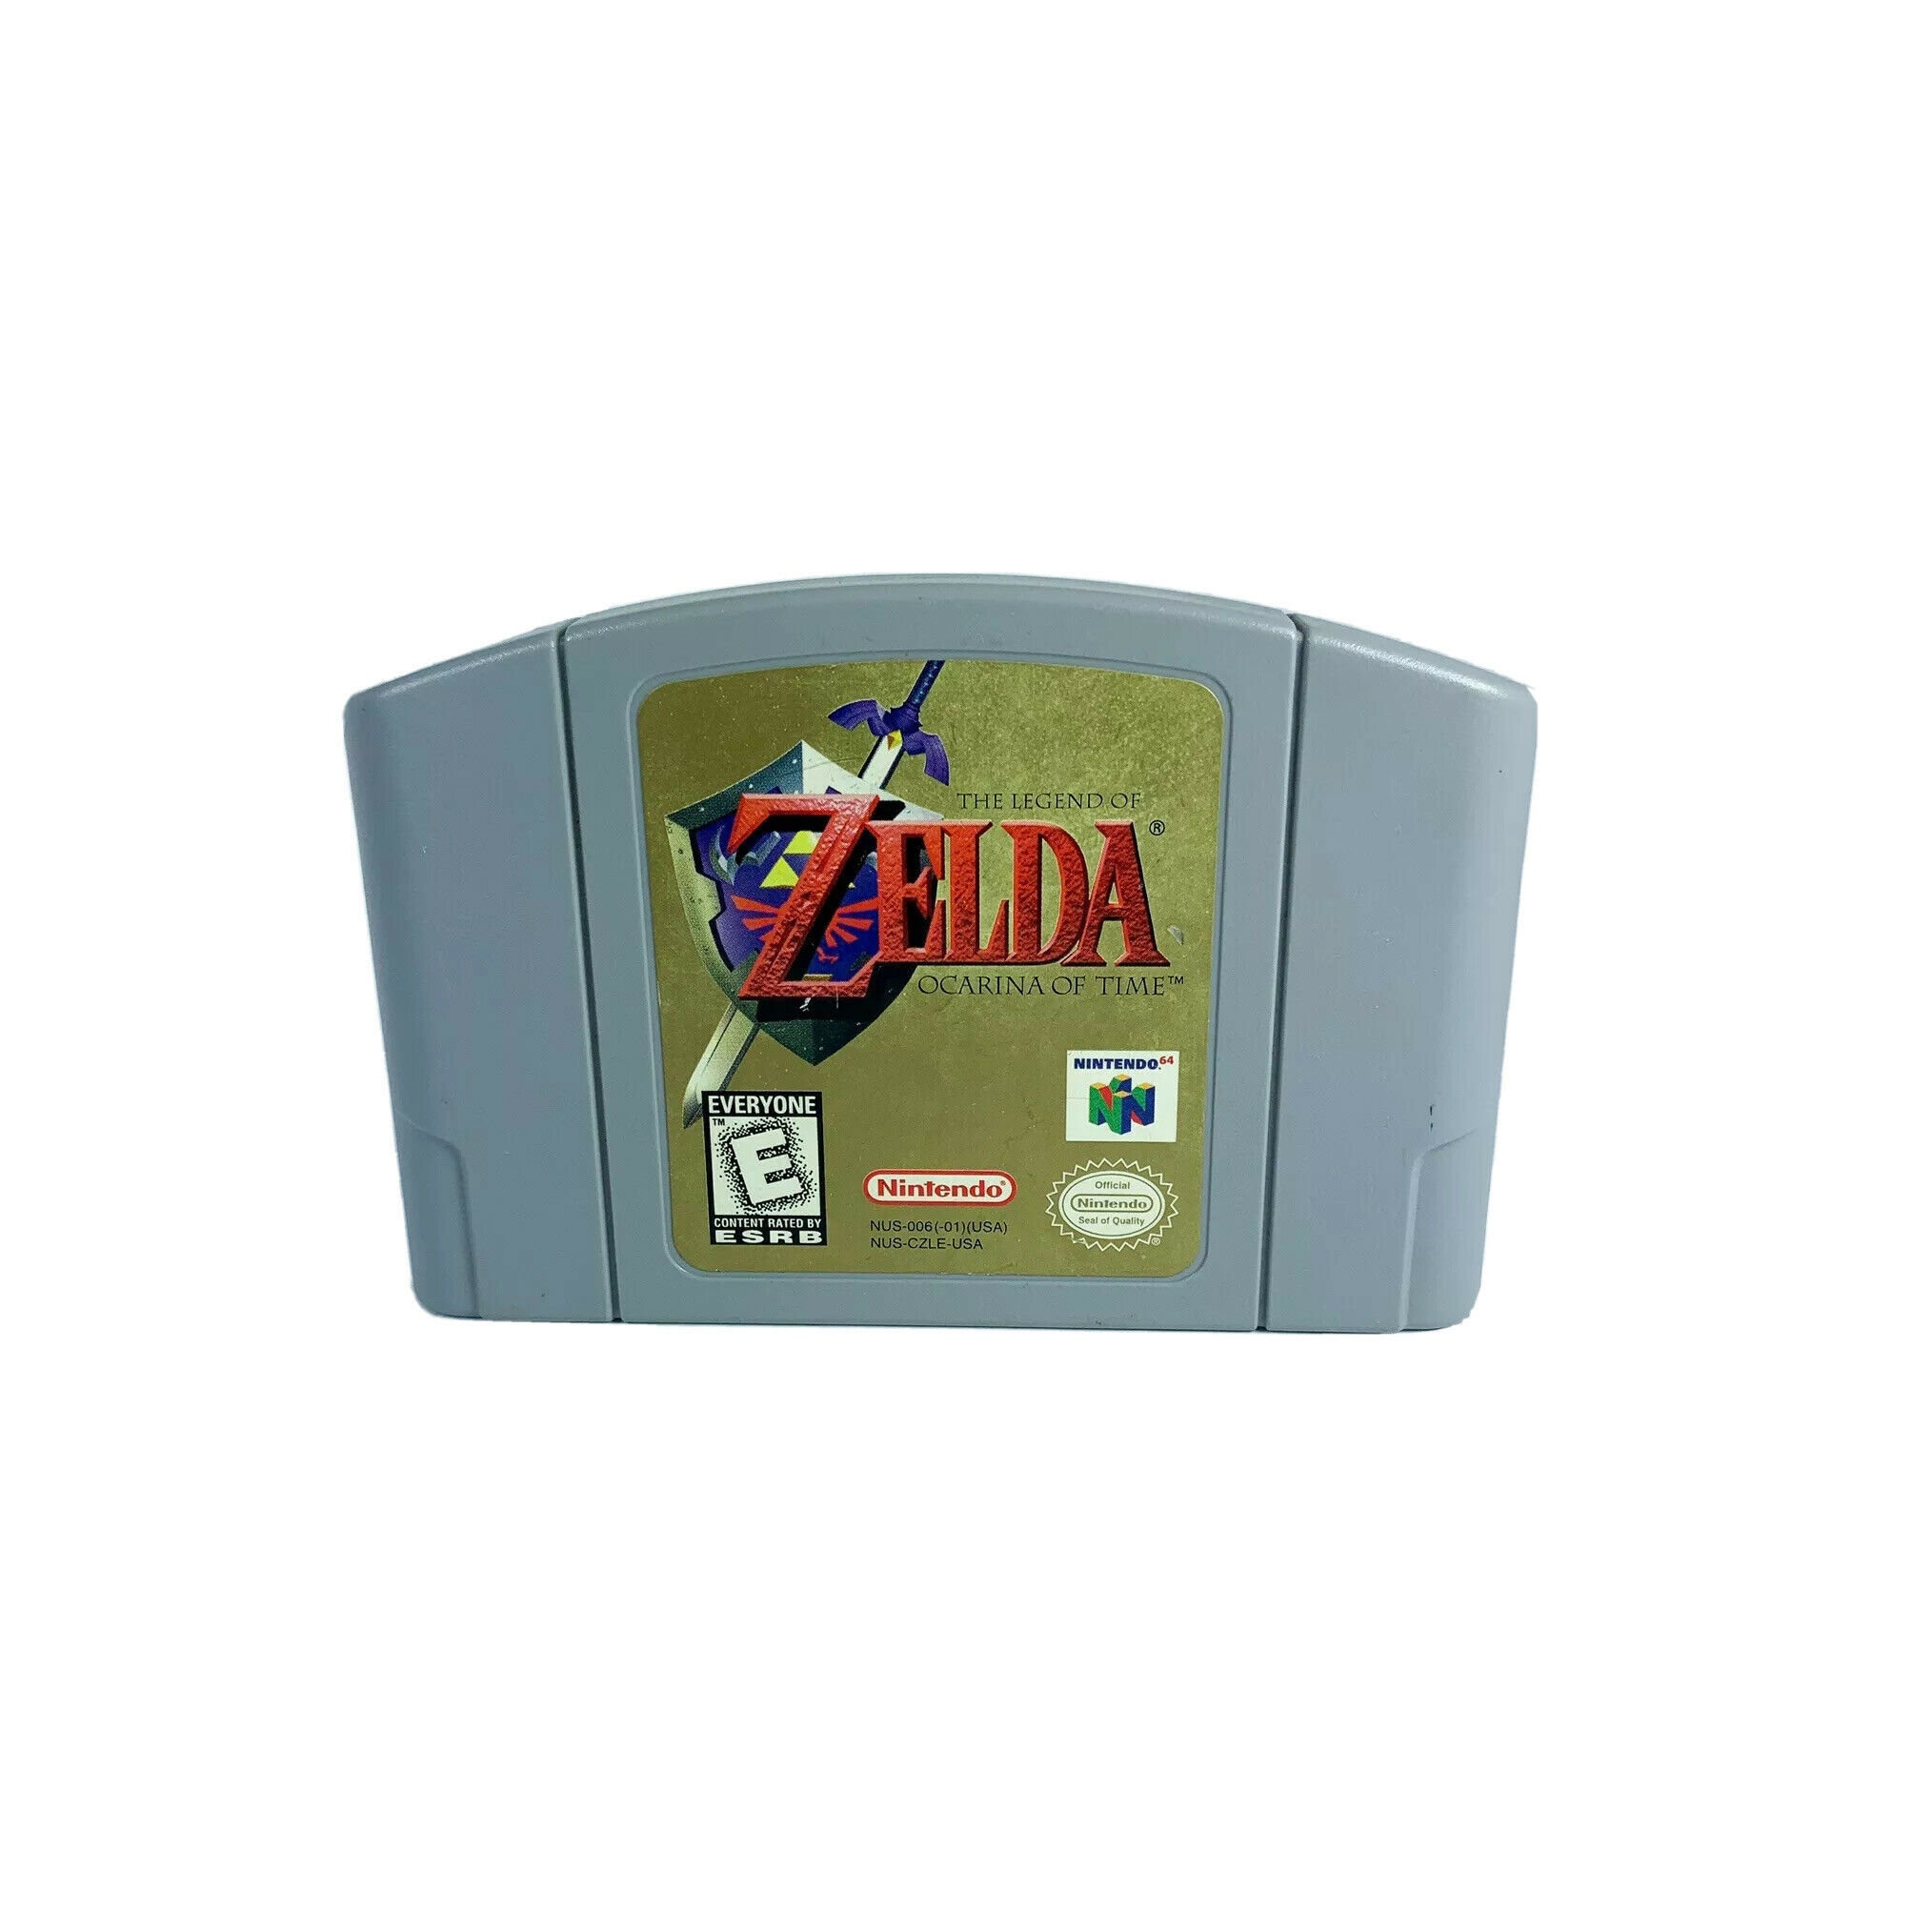 Authentic Nintendo 64 Zelda Ocarina of Time Game Box N64